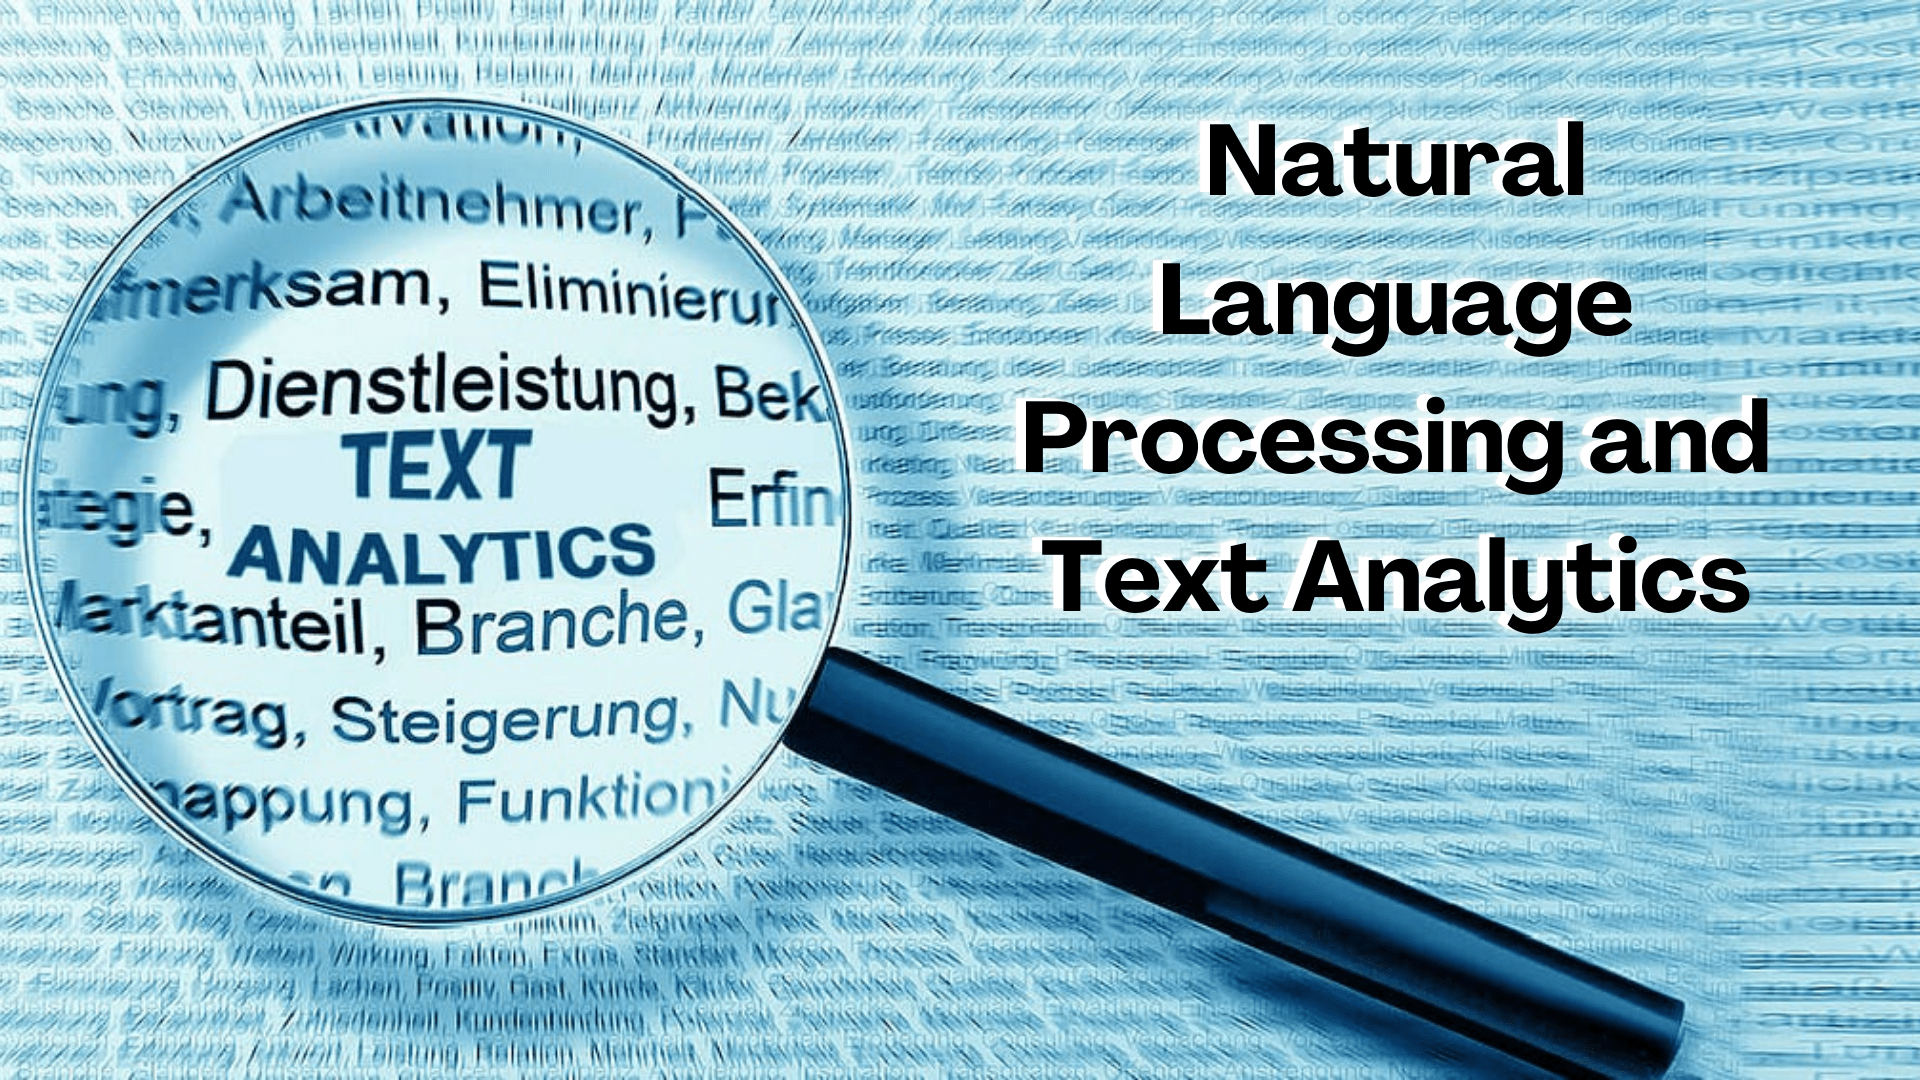 Natural Language Processing and Text Analytics